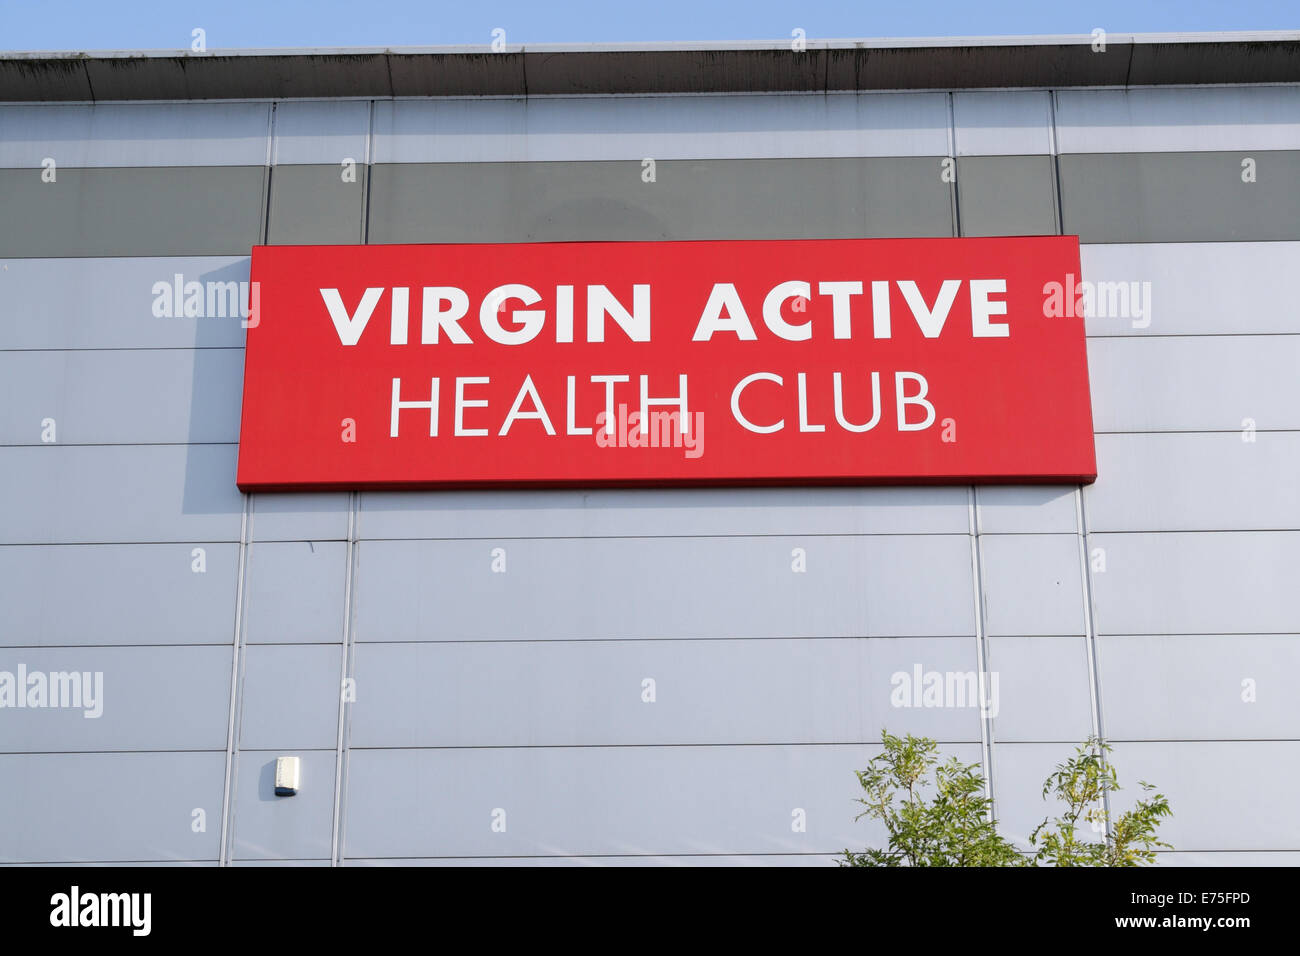 Virgin Active Health Club sign Stock Photo